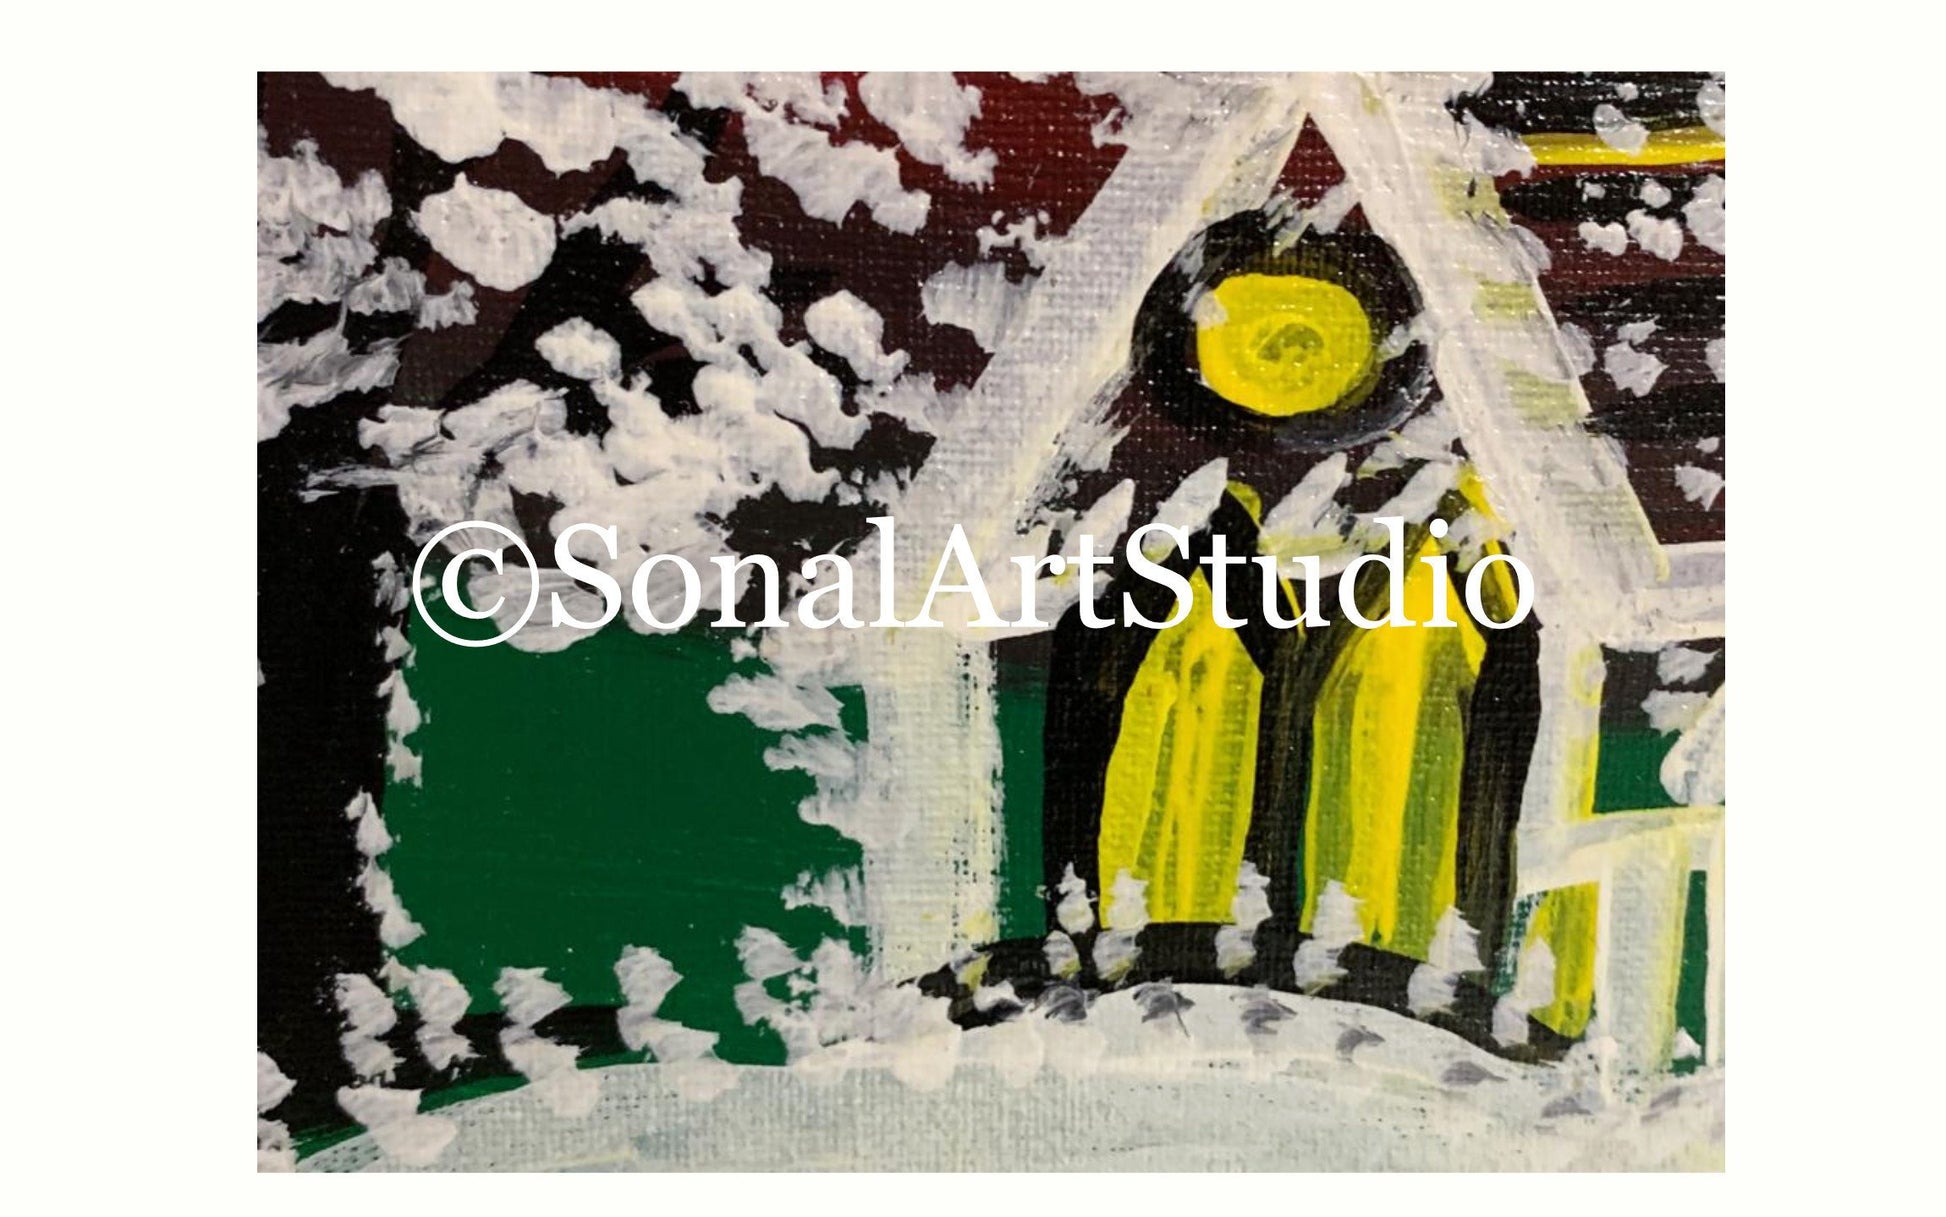 Snowy Winter House - SonalArtStudio